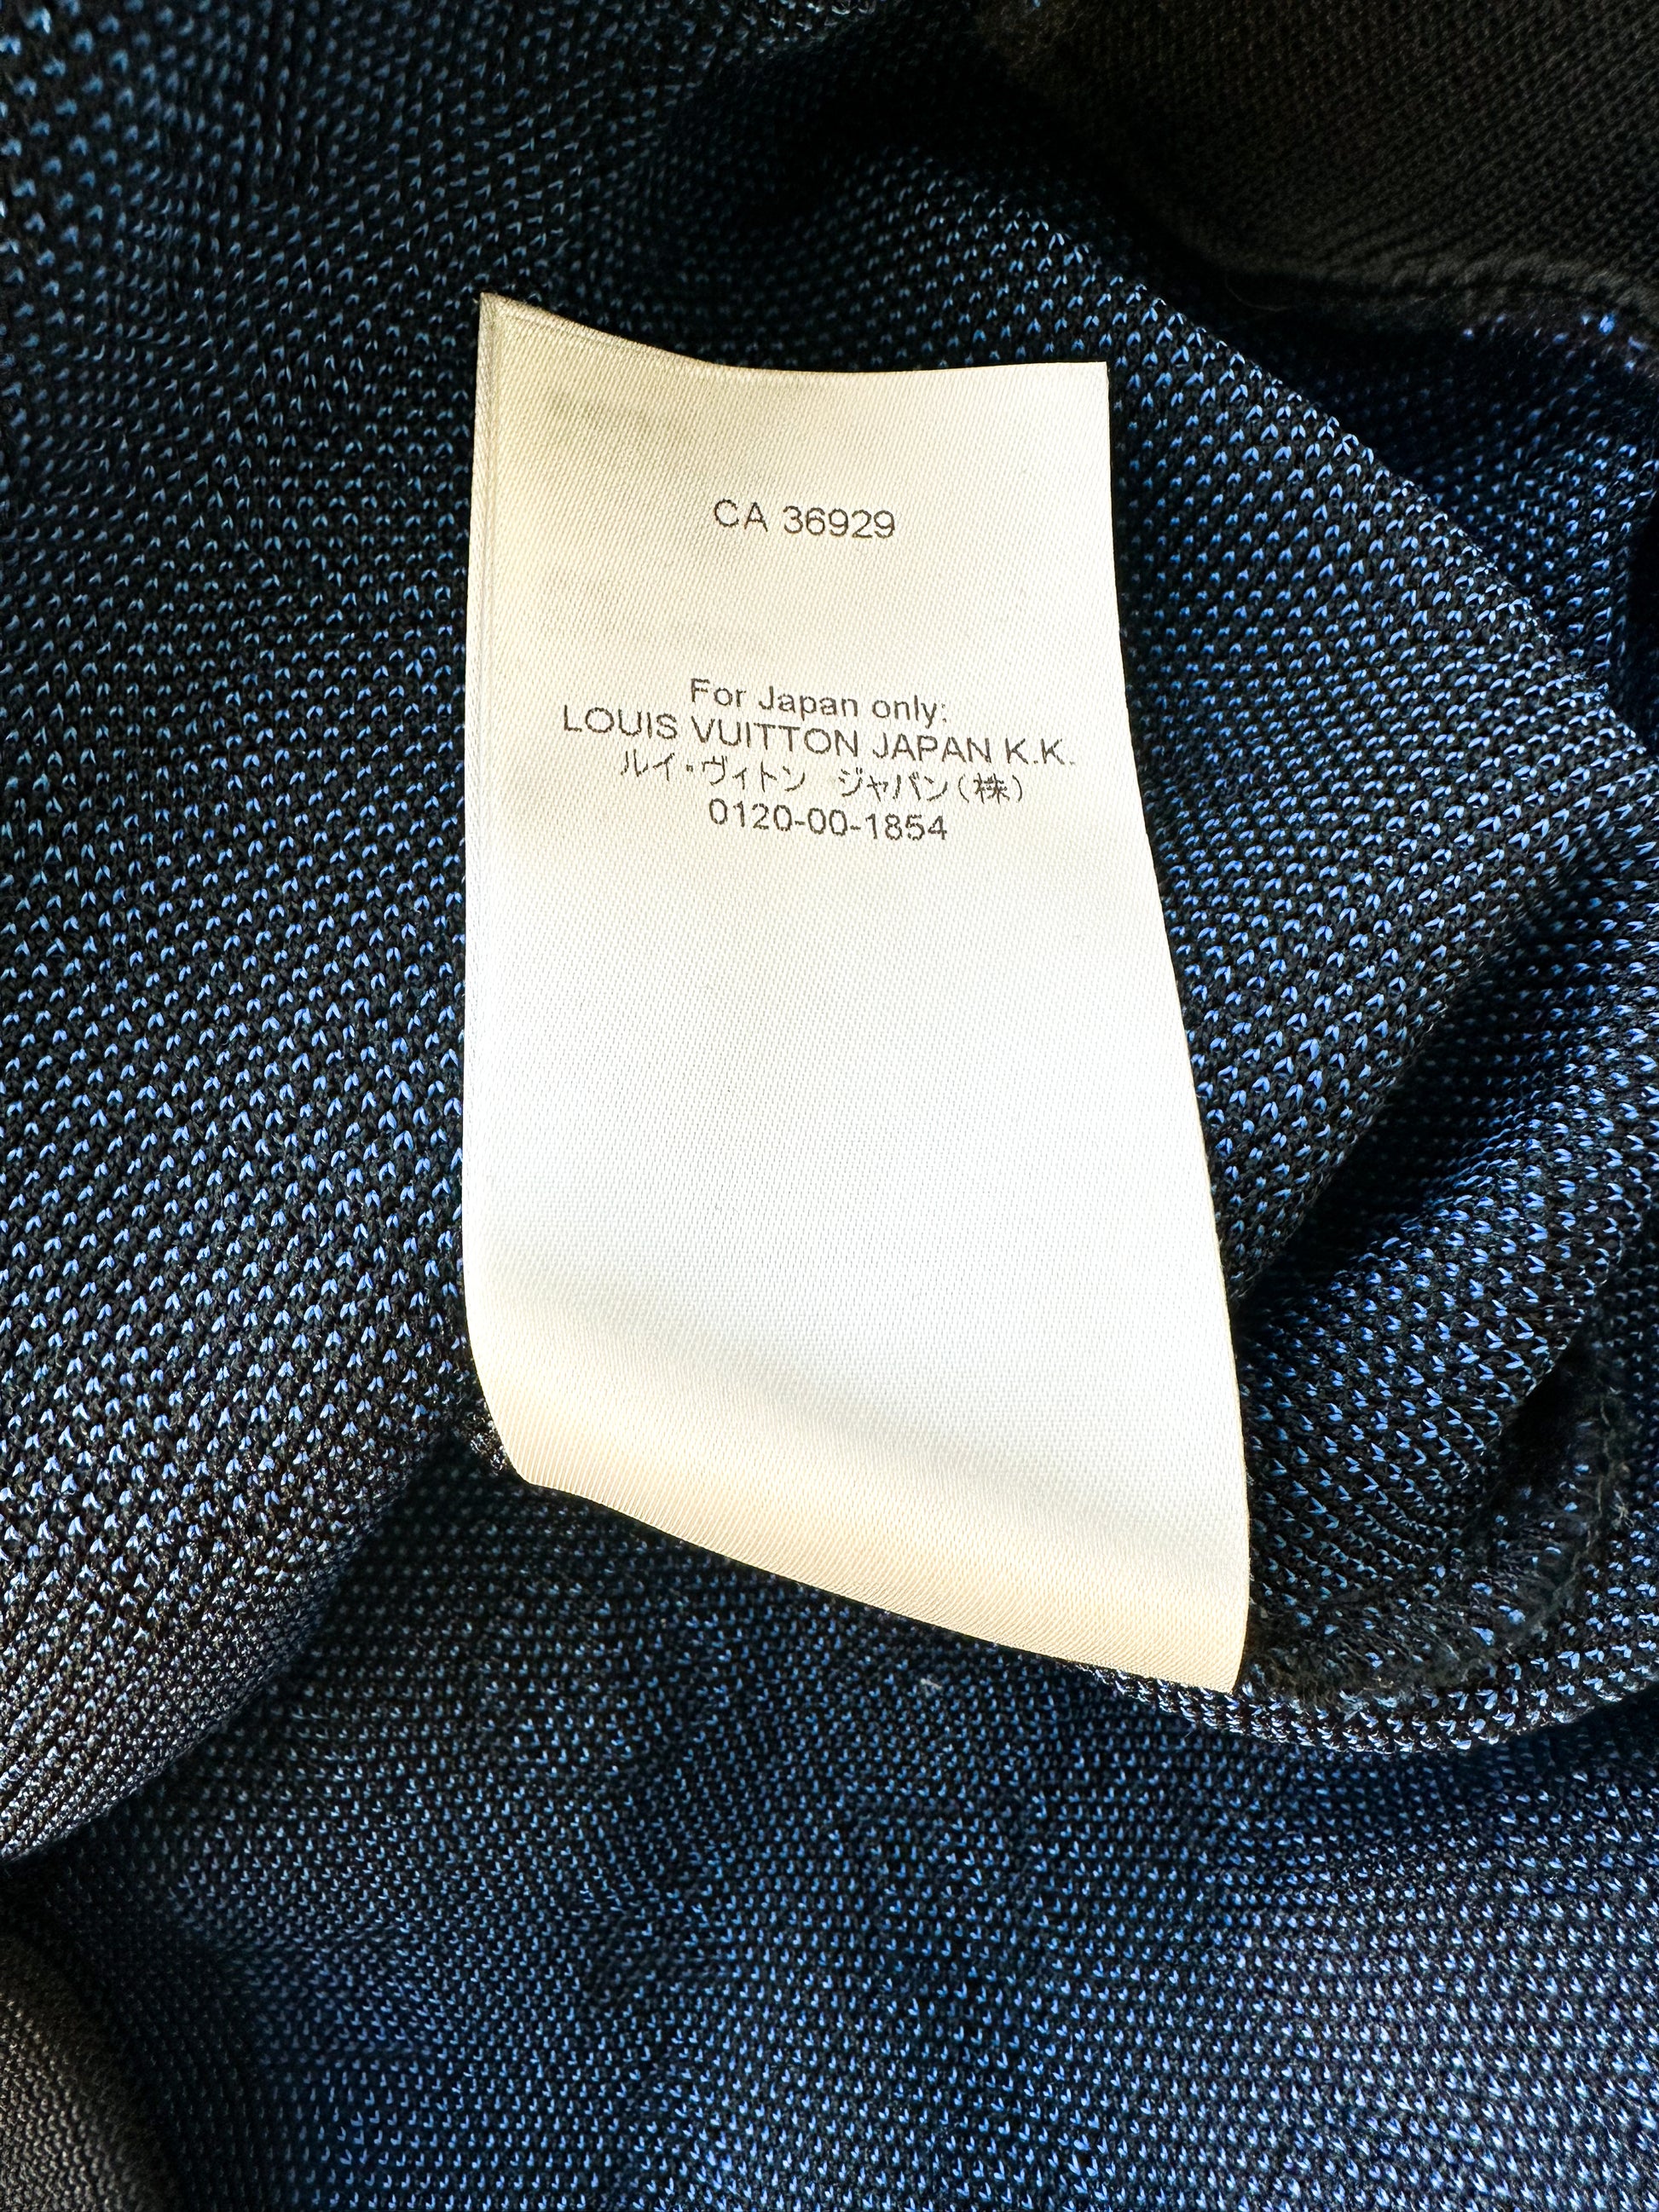 Louis Vuitton Brown Logo Monogram Black Fleece Hoodie, Pants - Blinkenzo